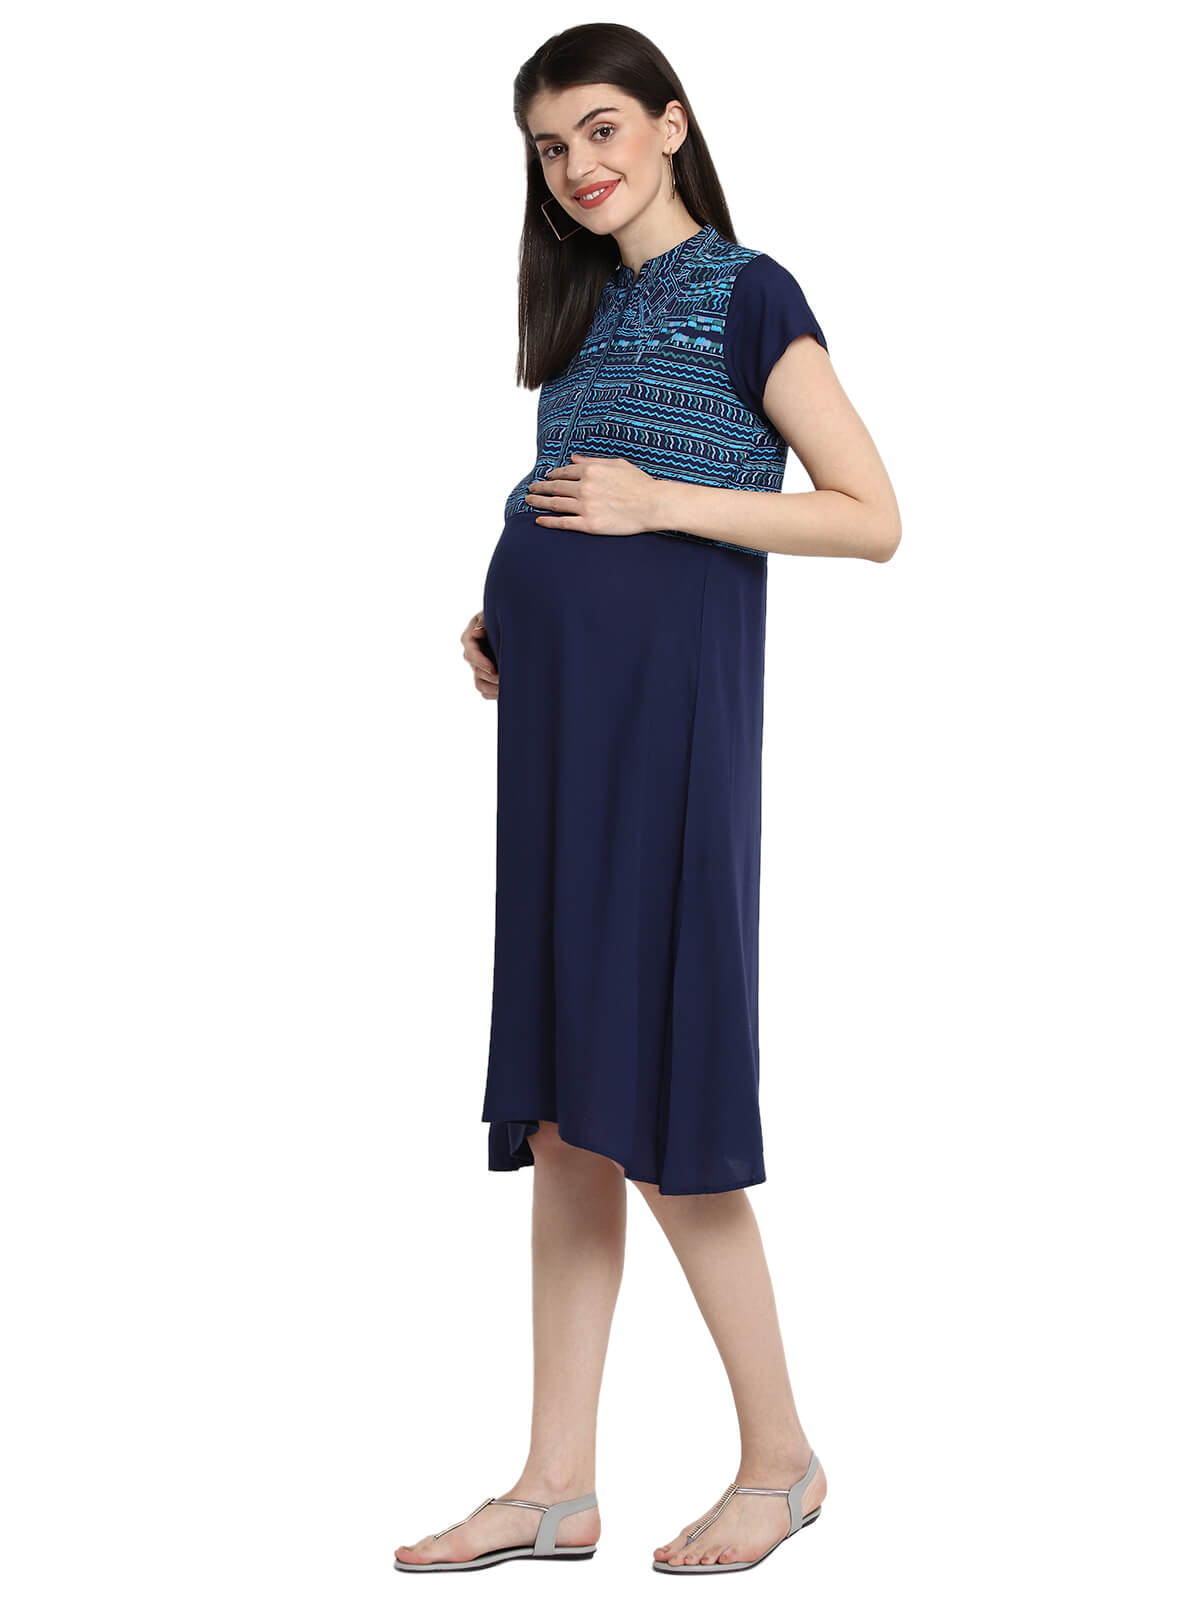 Women Maternity Dress With Printed Yoke And Nursing Access